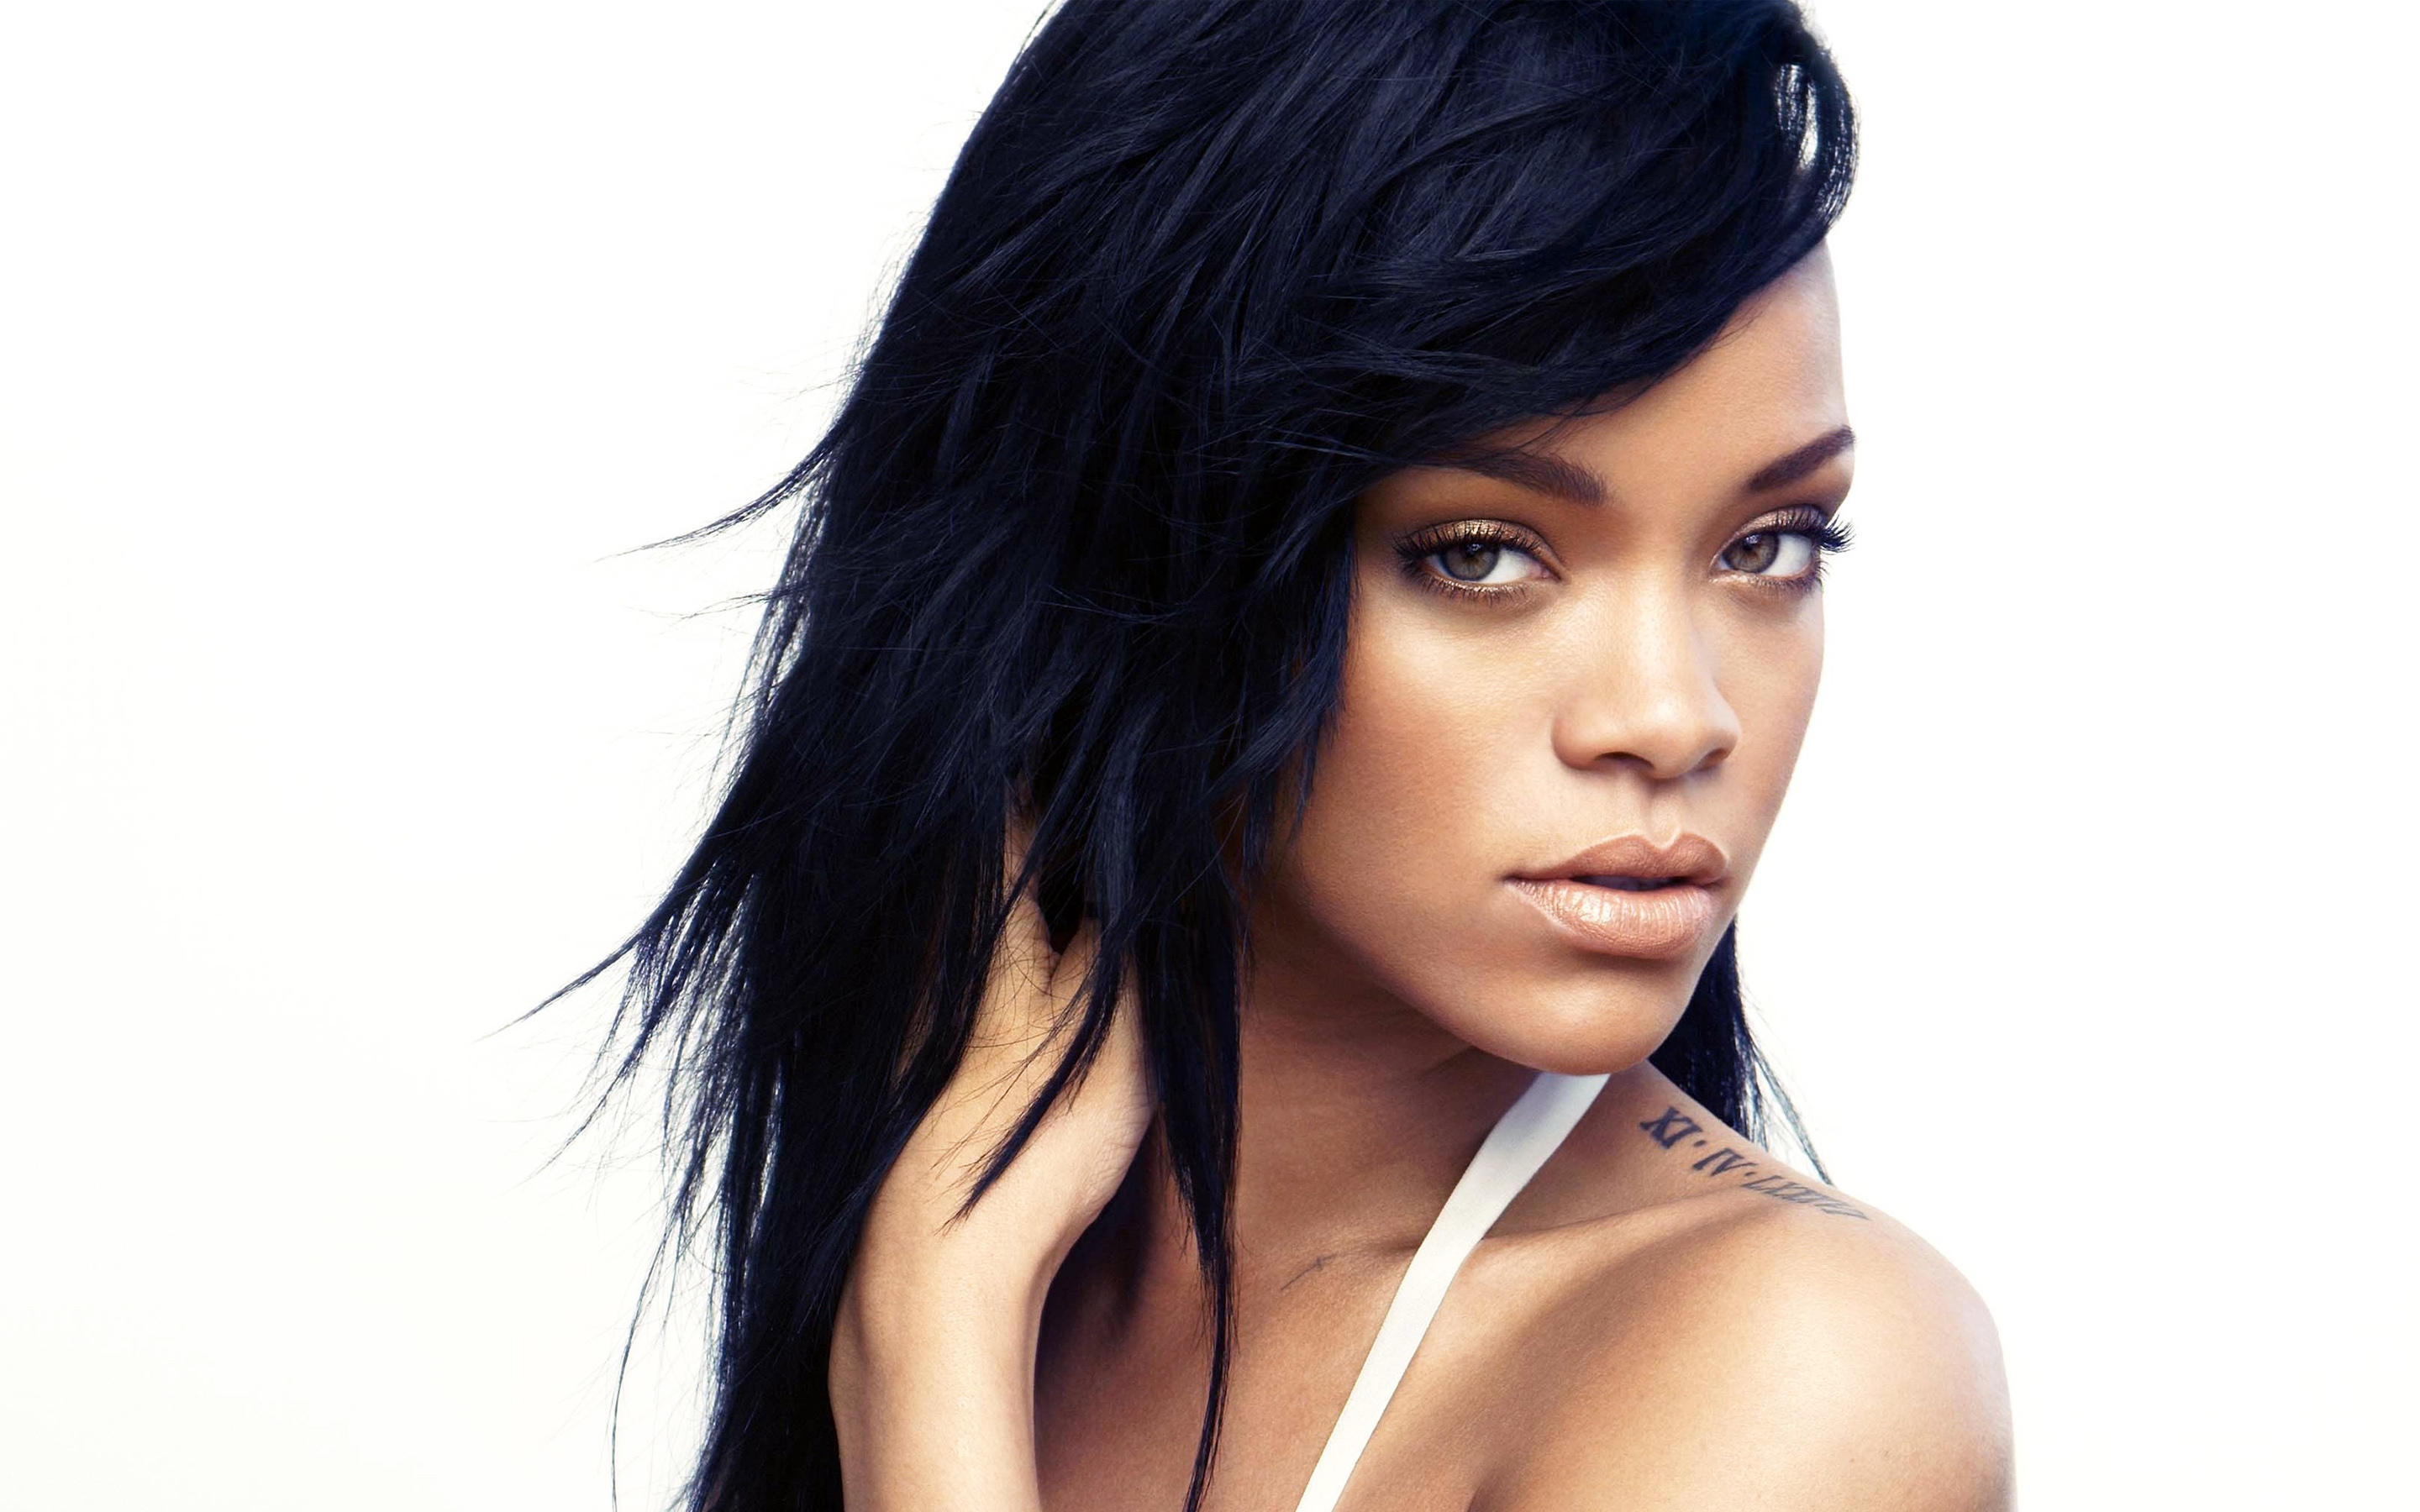  Rihanna HQ Background Images